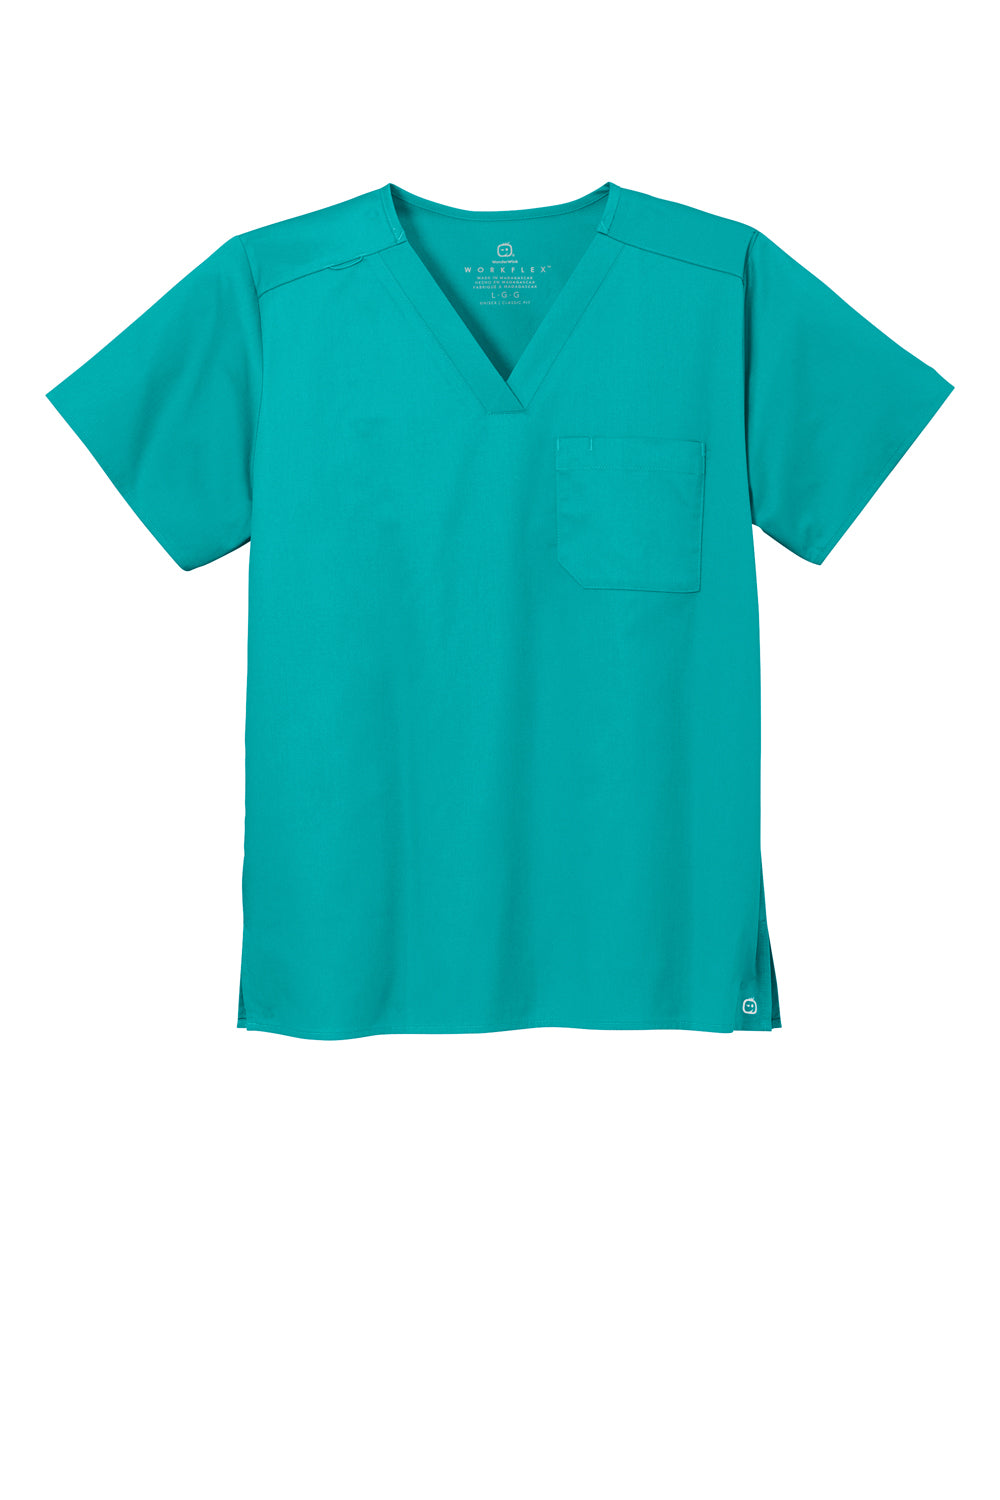 Wonderwink WW3160 WorkFlex Short Sleeve V-Neck Shirt w/ Pocket Teal Blue Flat Front